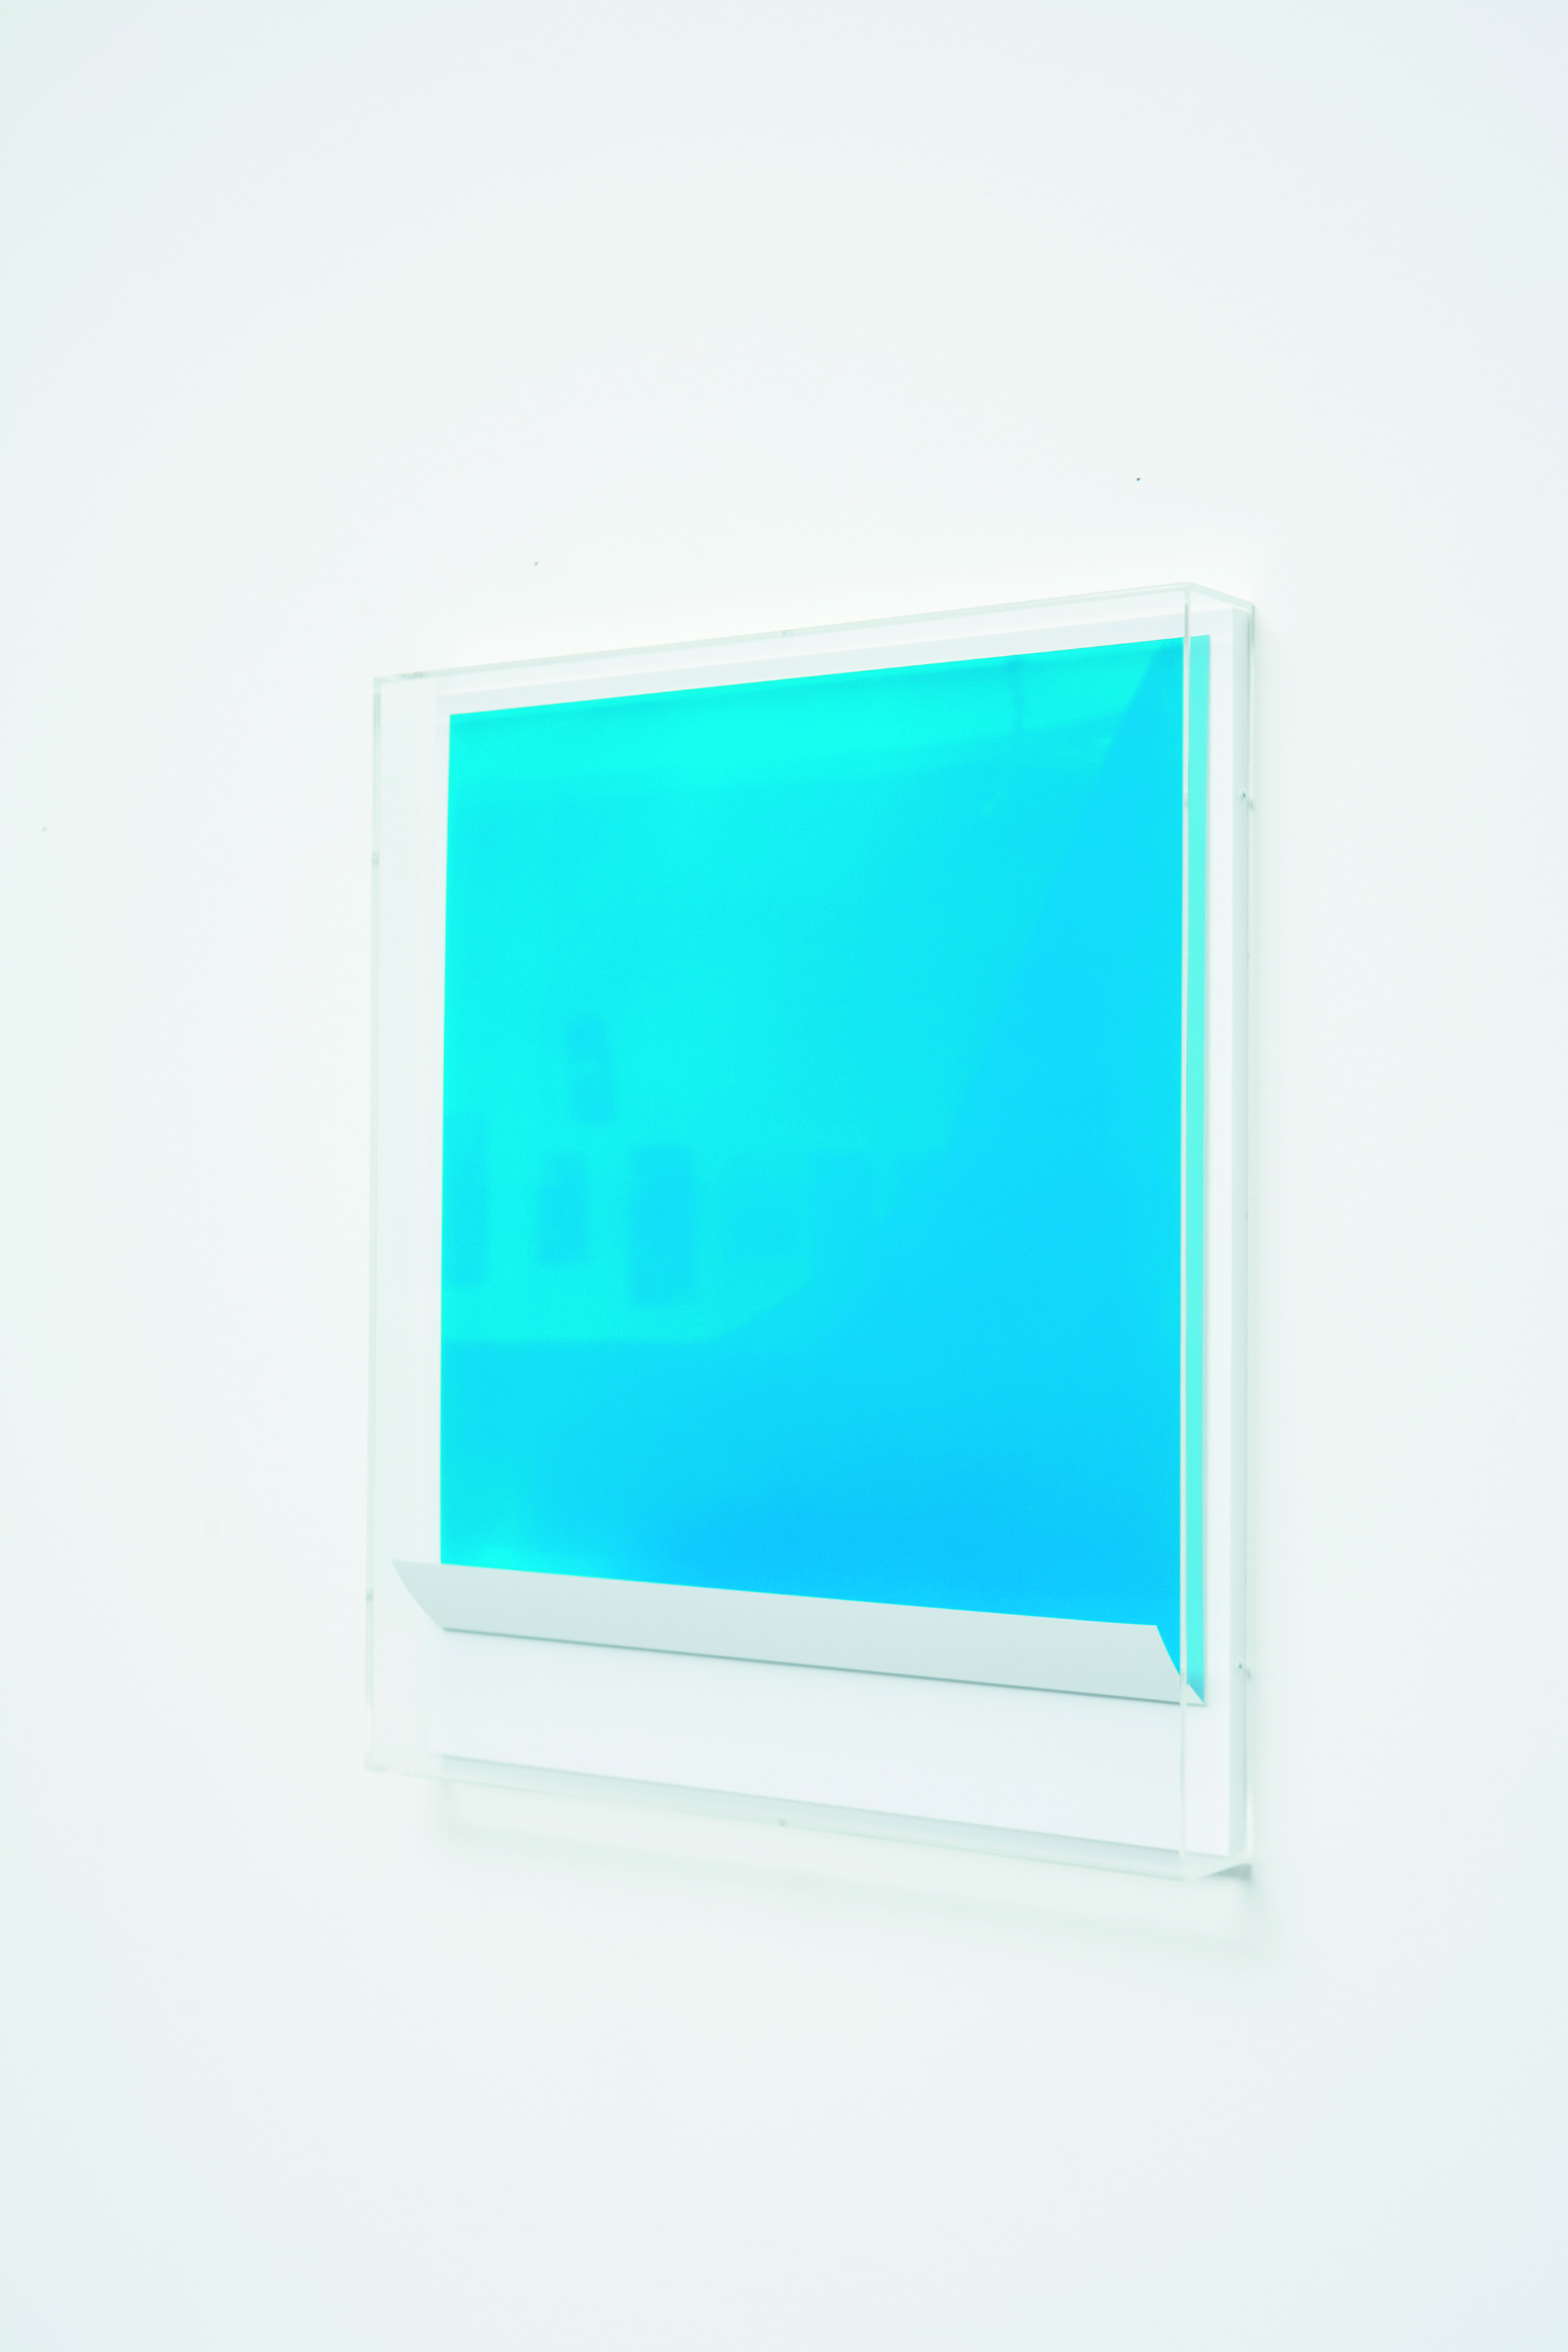 Lighter, blue up VI, 2009 © Wolfgang Tillmans, dzięki uprzejmości Galerie Buchholz, Köln / Berlin